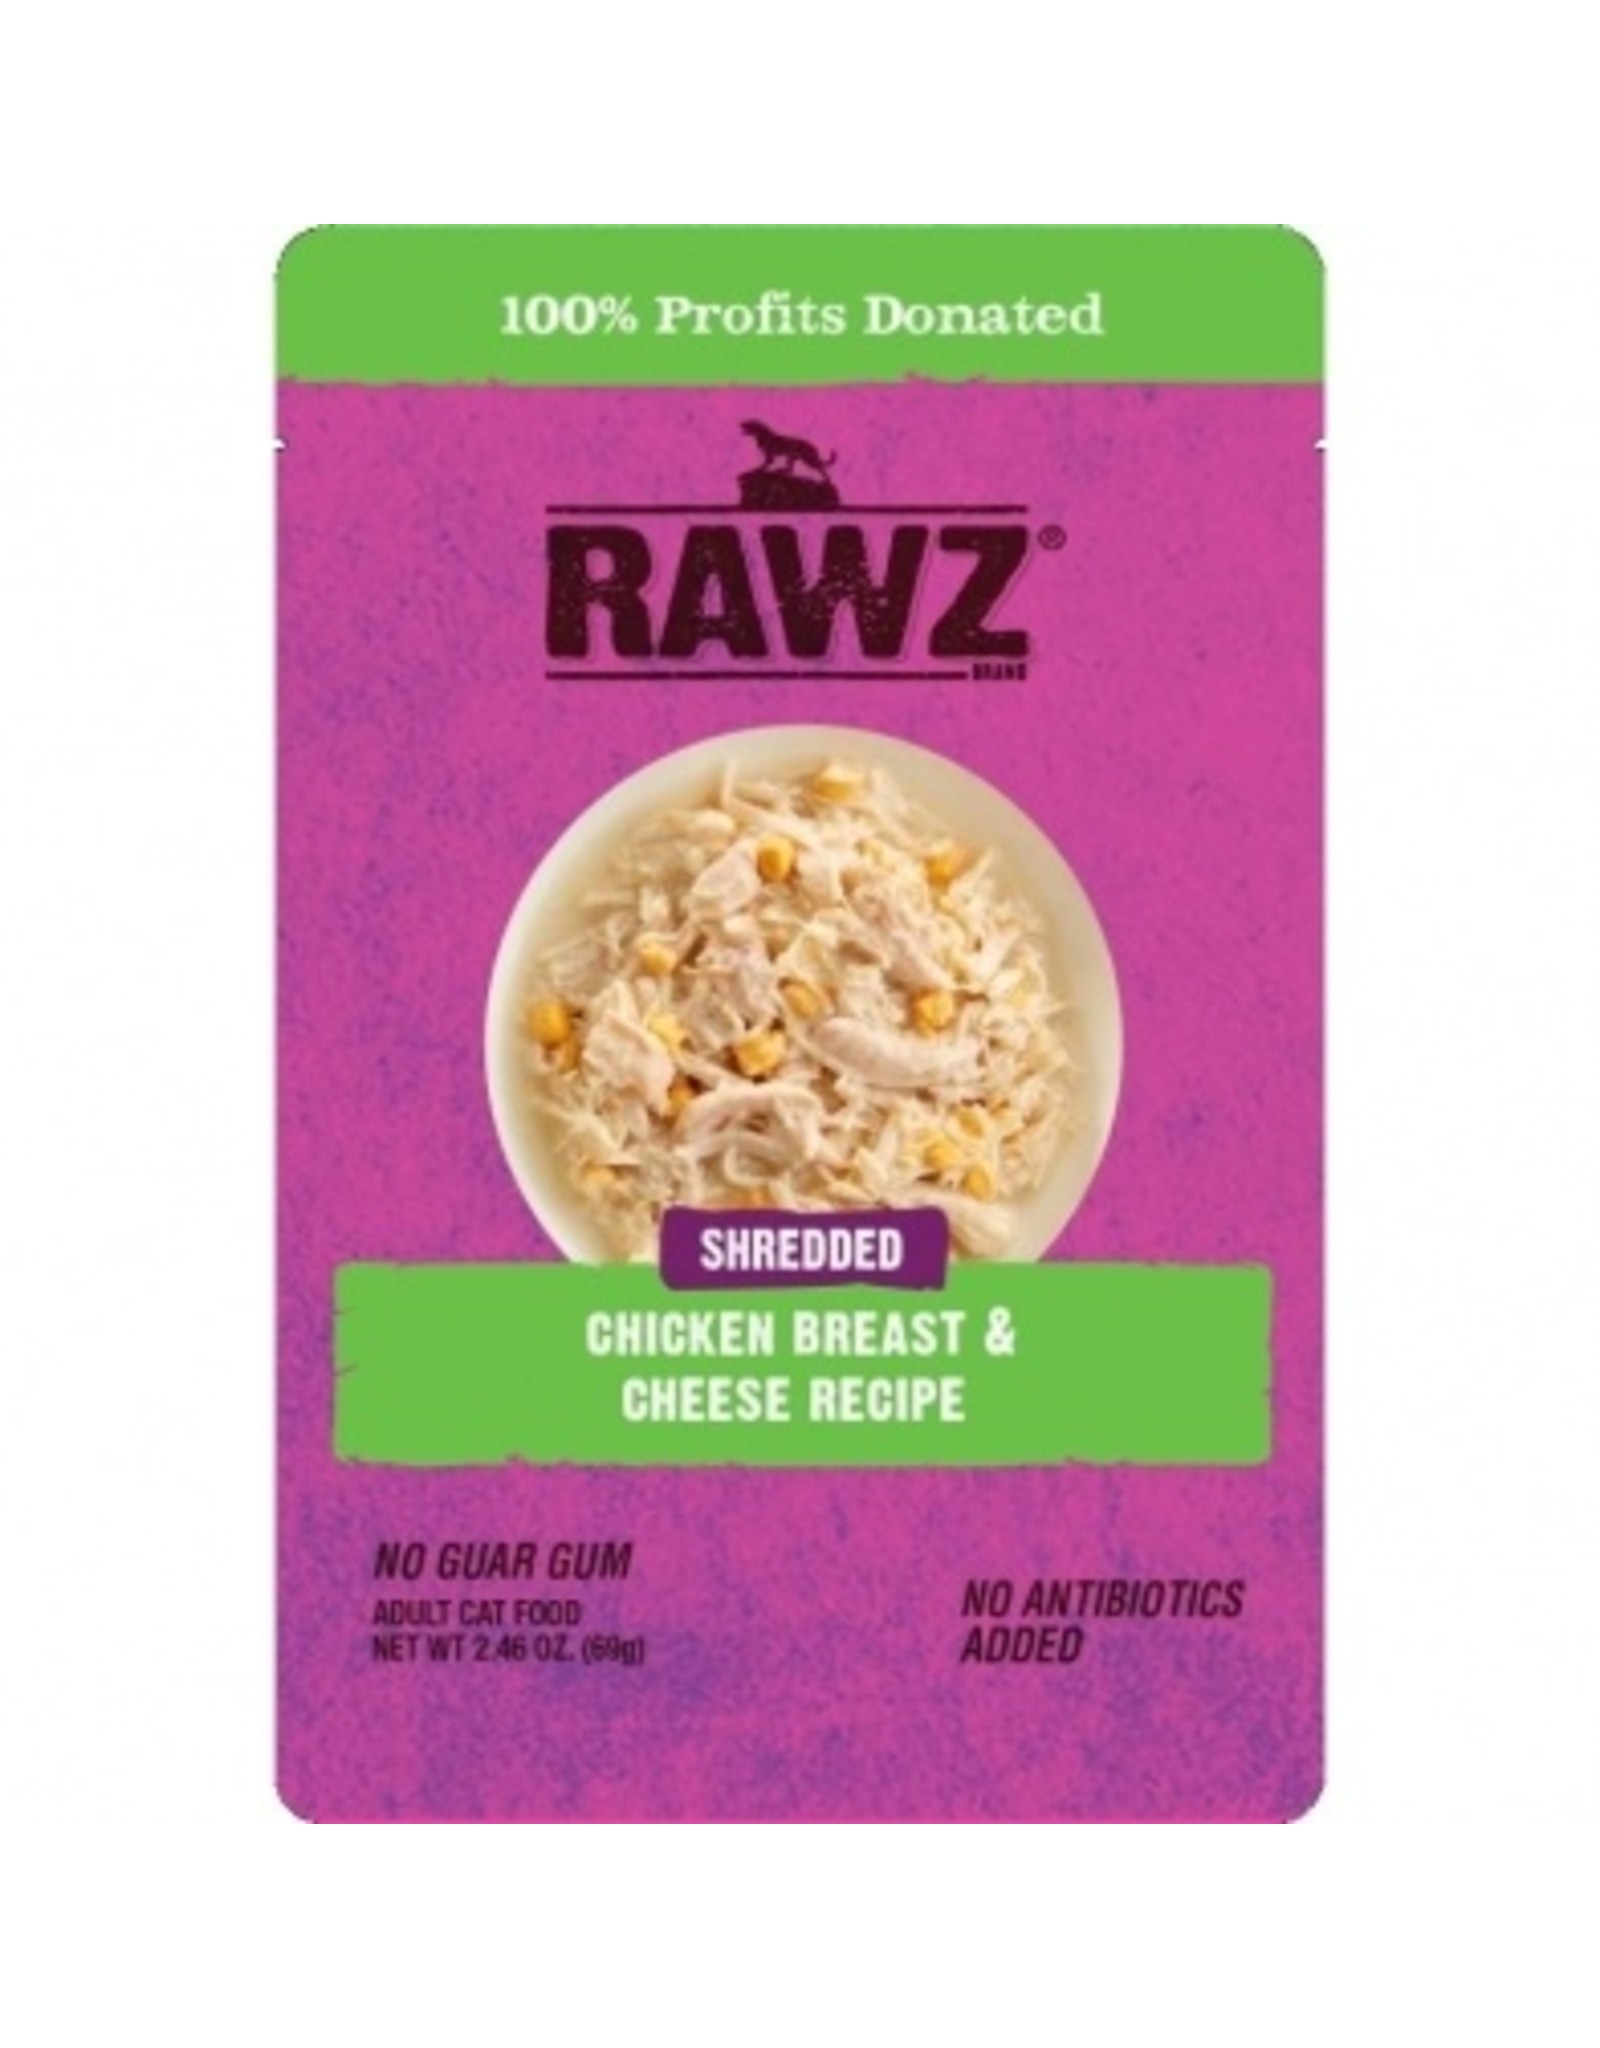 Rawz Cat Shredded Chicken Breast & Cheese Pouch 2.46oz